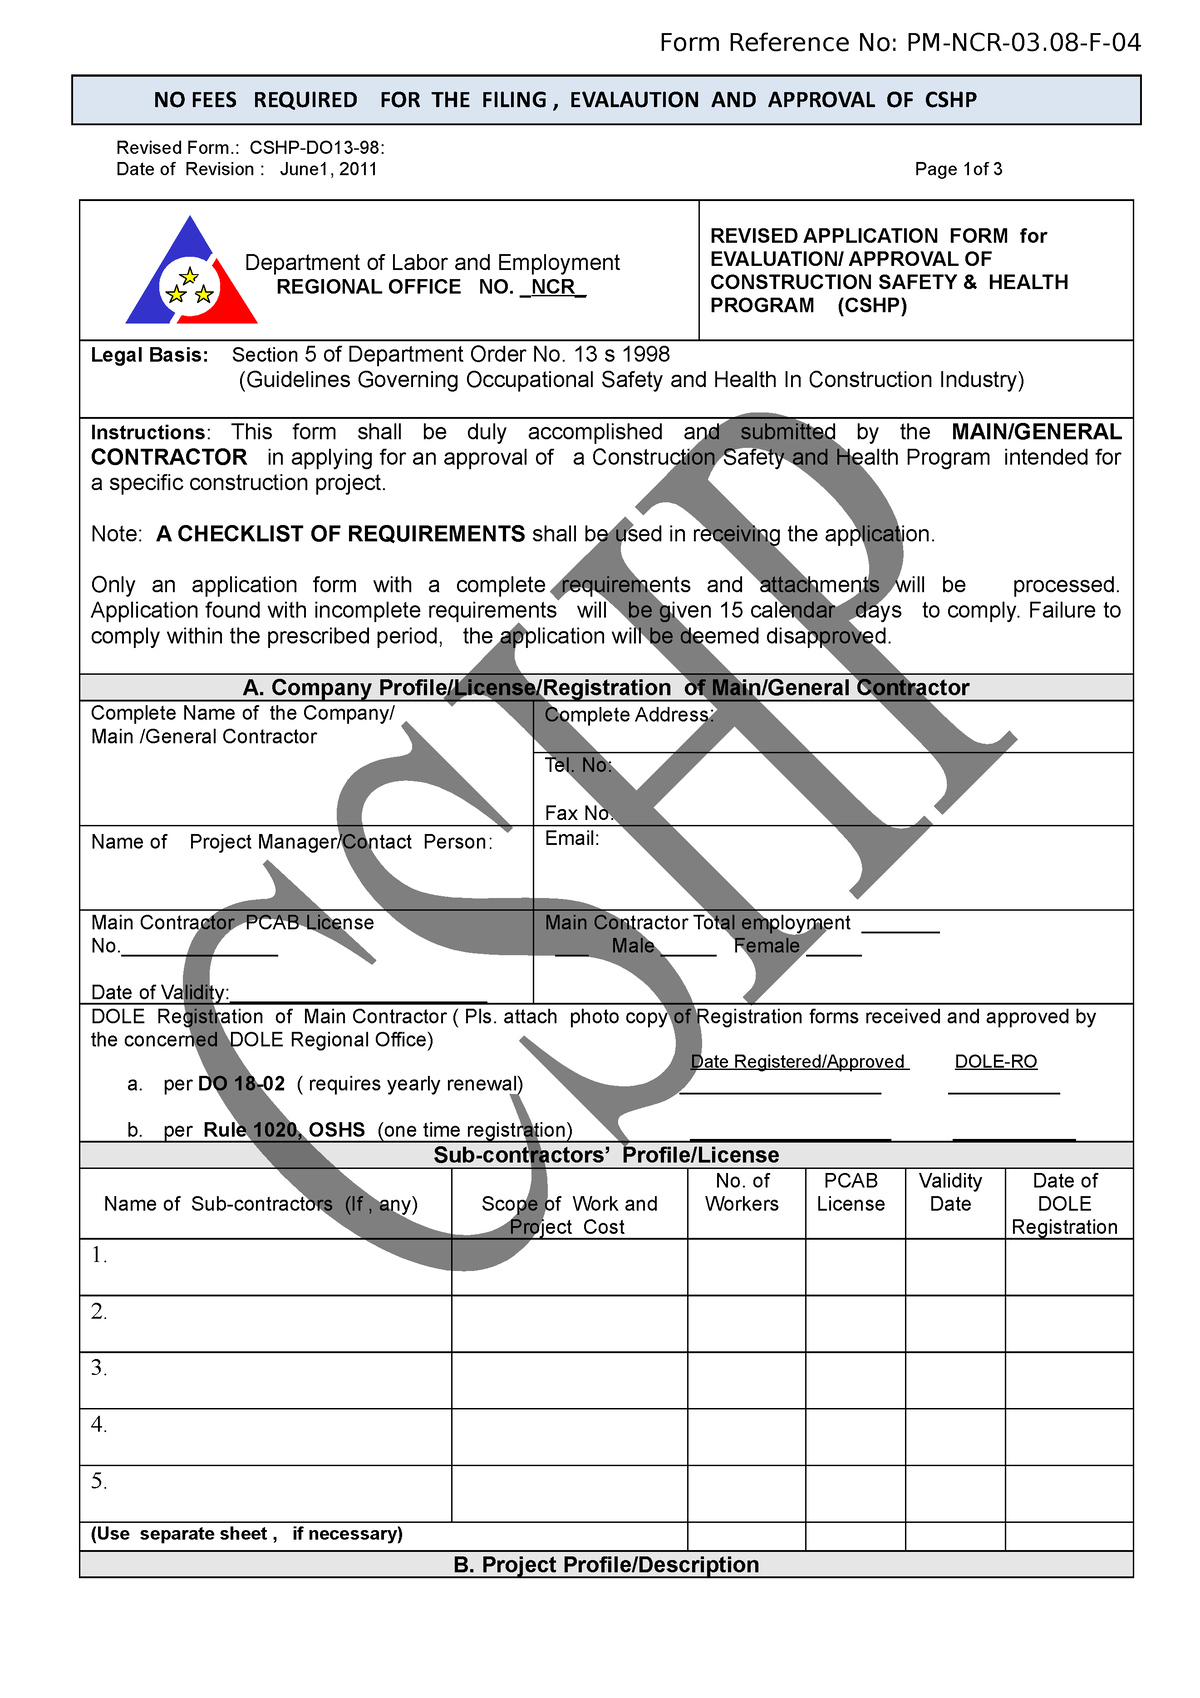 Comprehensive Cshp Application Form Form Reference No Pm Ncr 03 F Revised Form Cshp Do13 4188